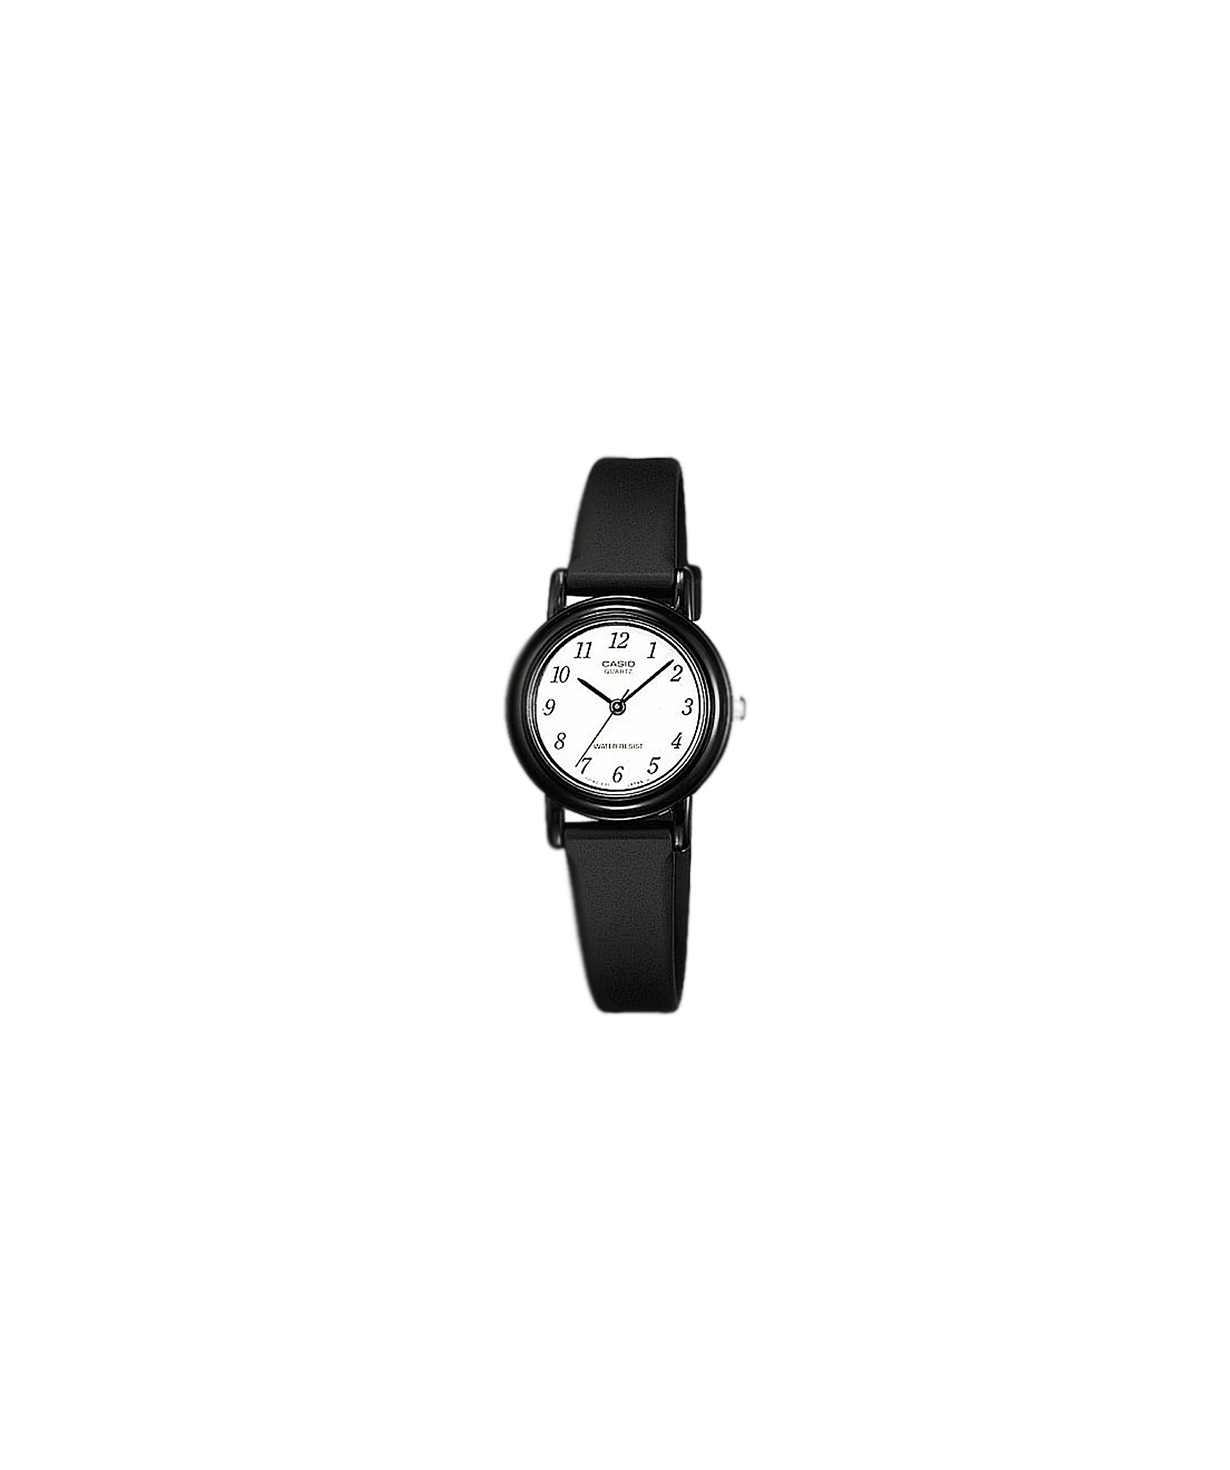 Ժամացույց  «Casio» ձեռքի  LQ-139BMV-1BLDF